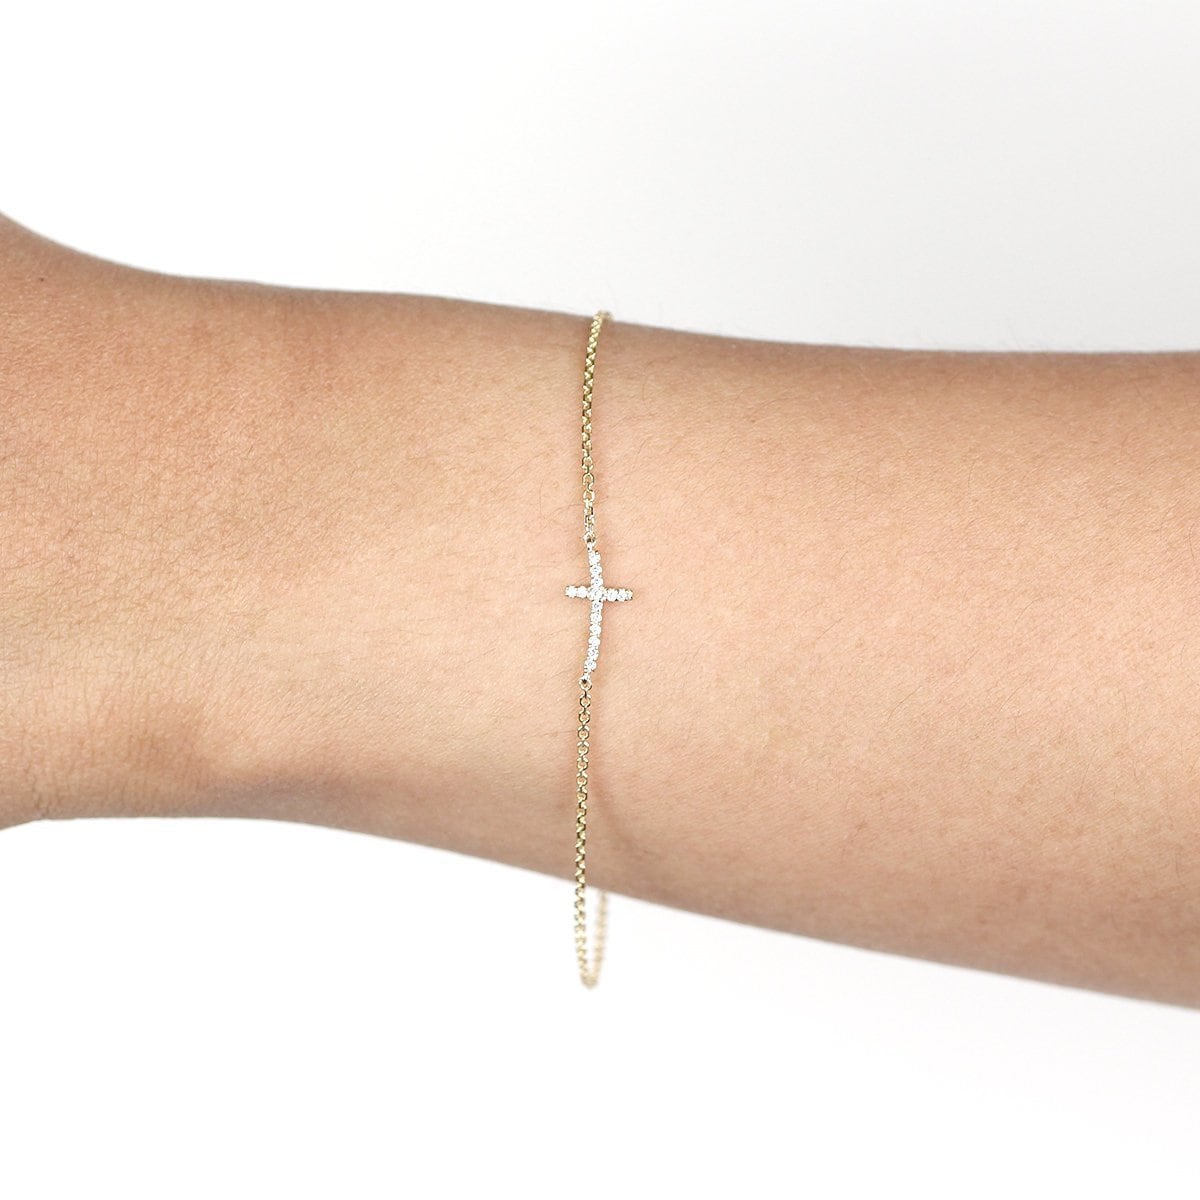 Shop Mini Diamond Cross Bracelet Online - Australia | Jacque Fine Jewellery